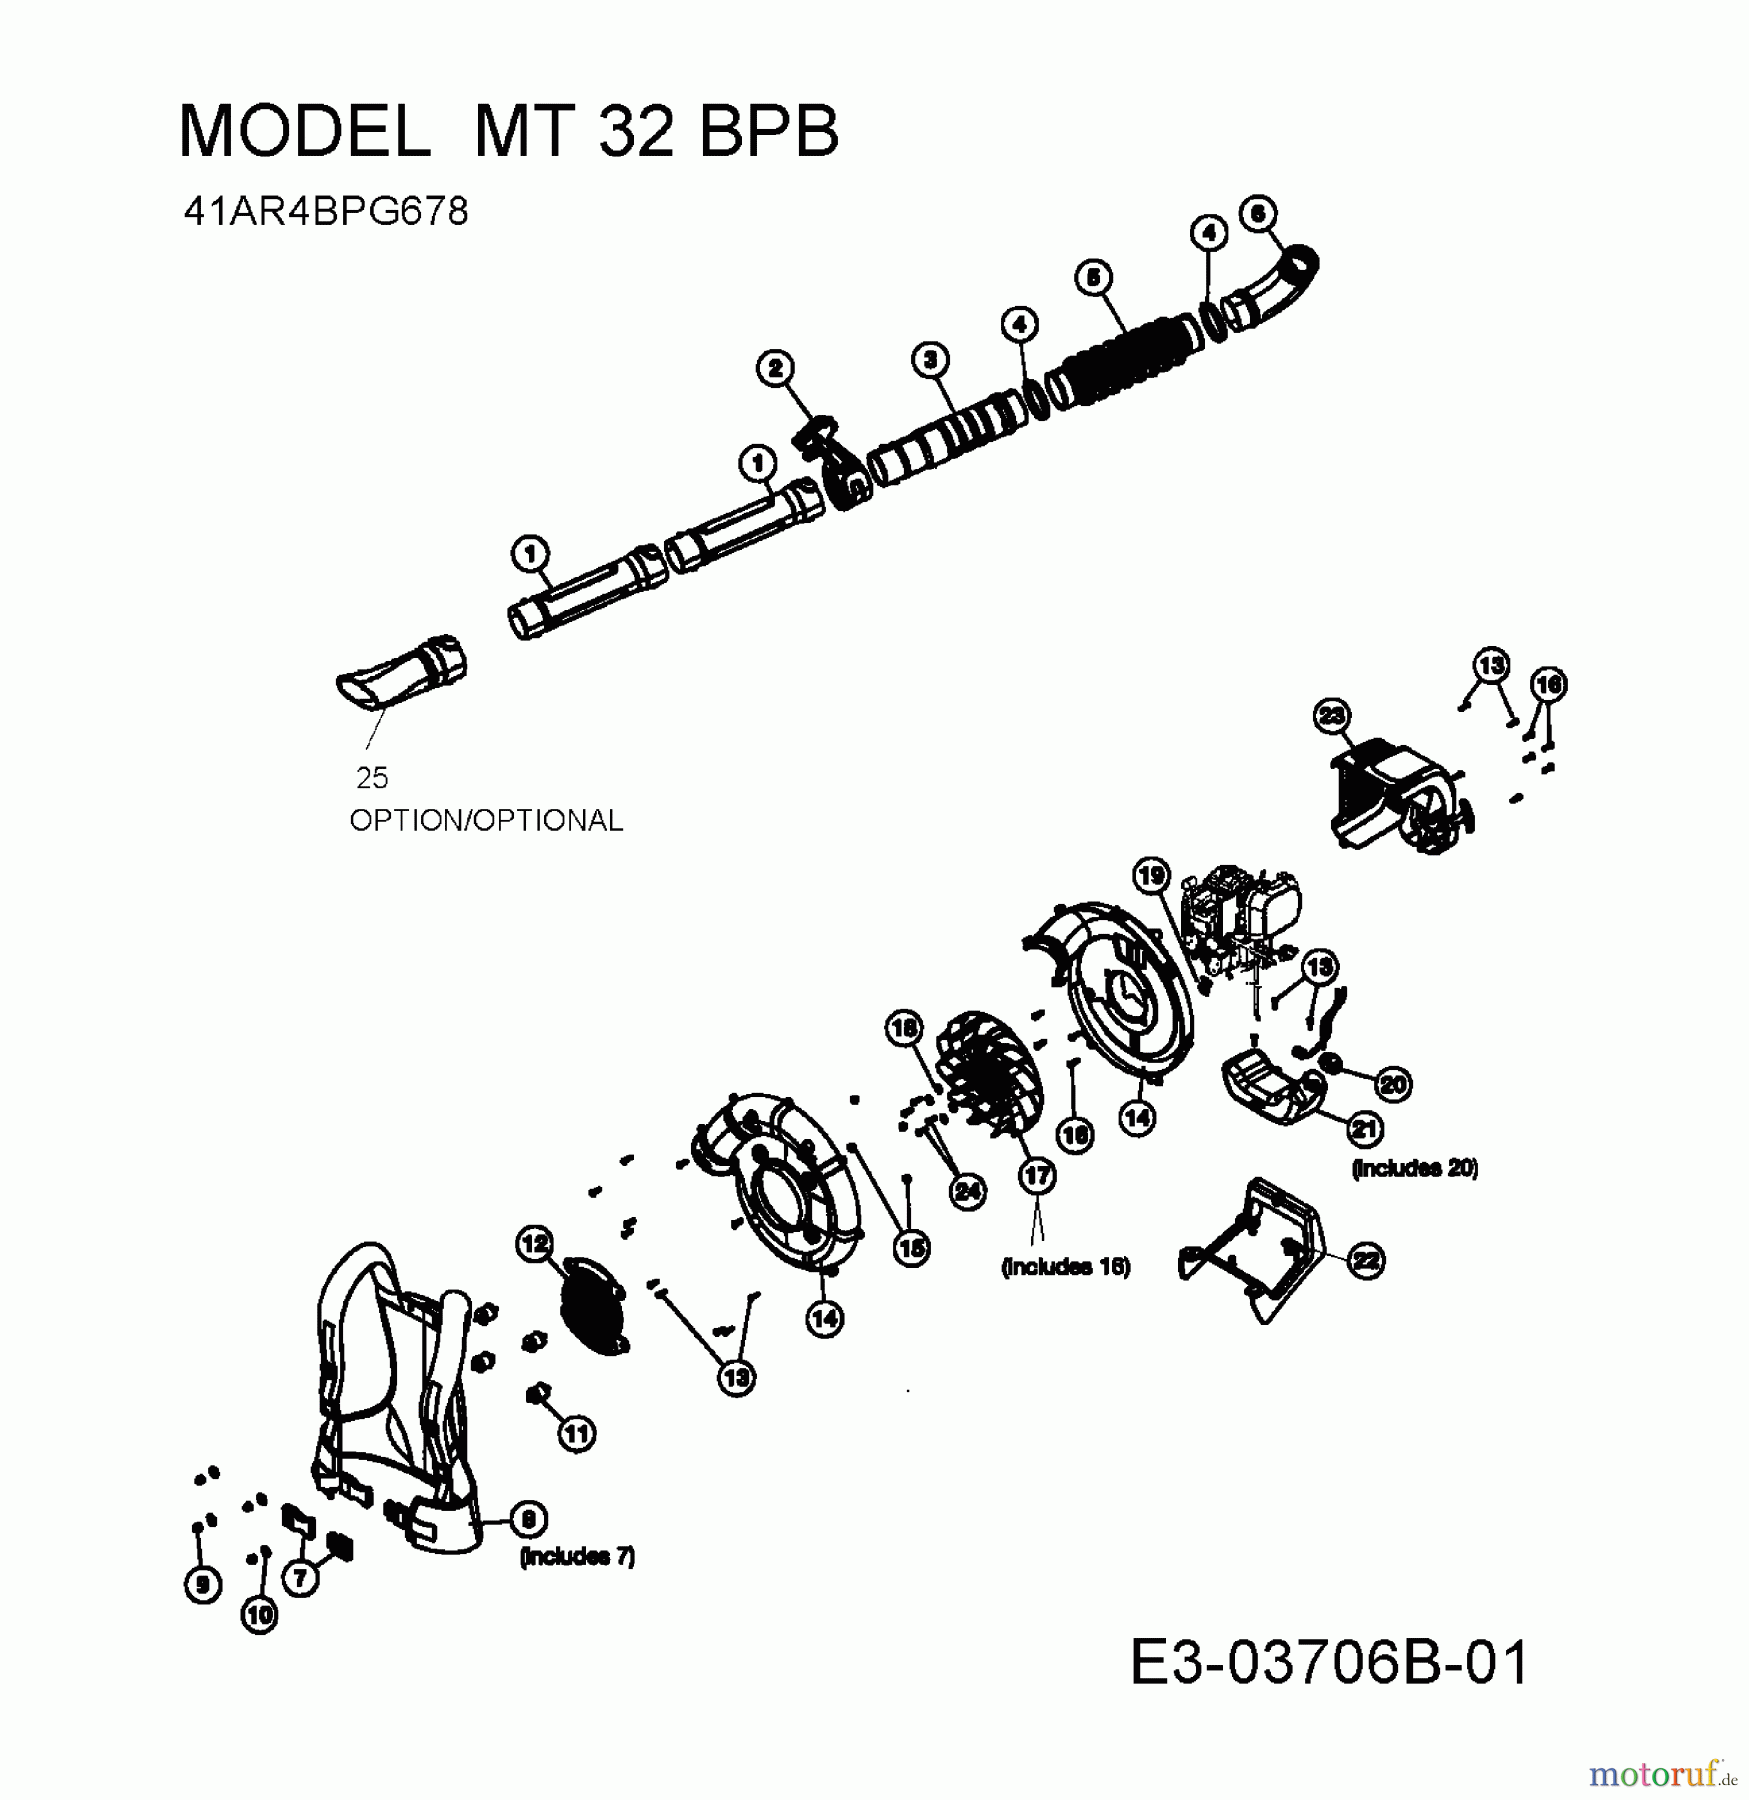  MTD Leaf blower, Blower vac MT 32 BPB 41AR4BPG678  (2009) Basic machine